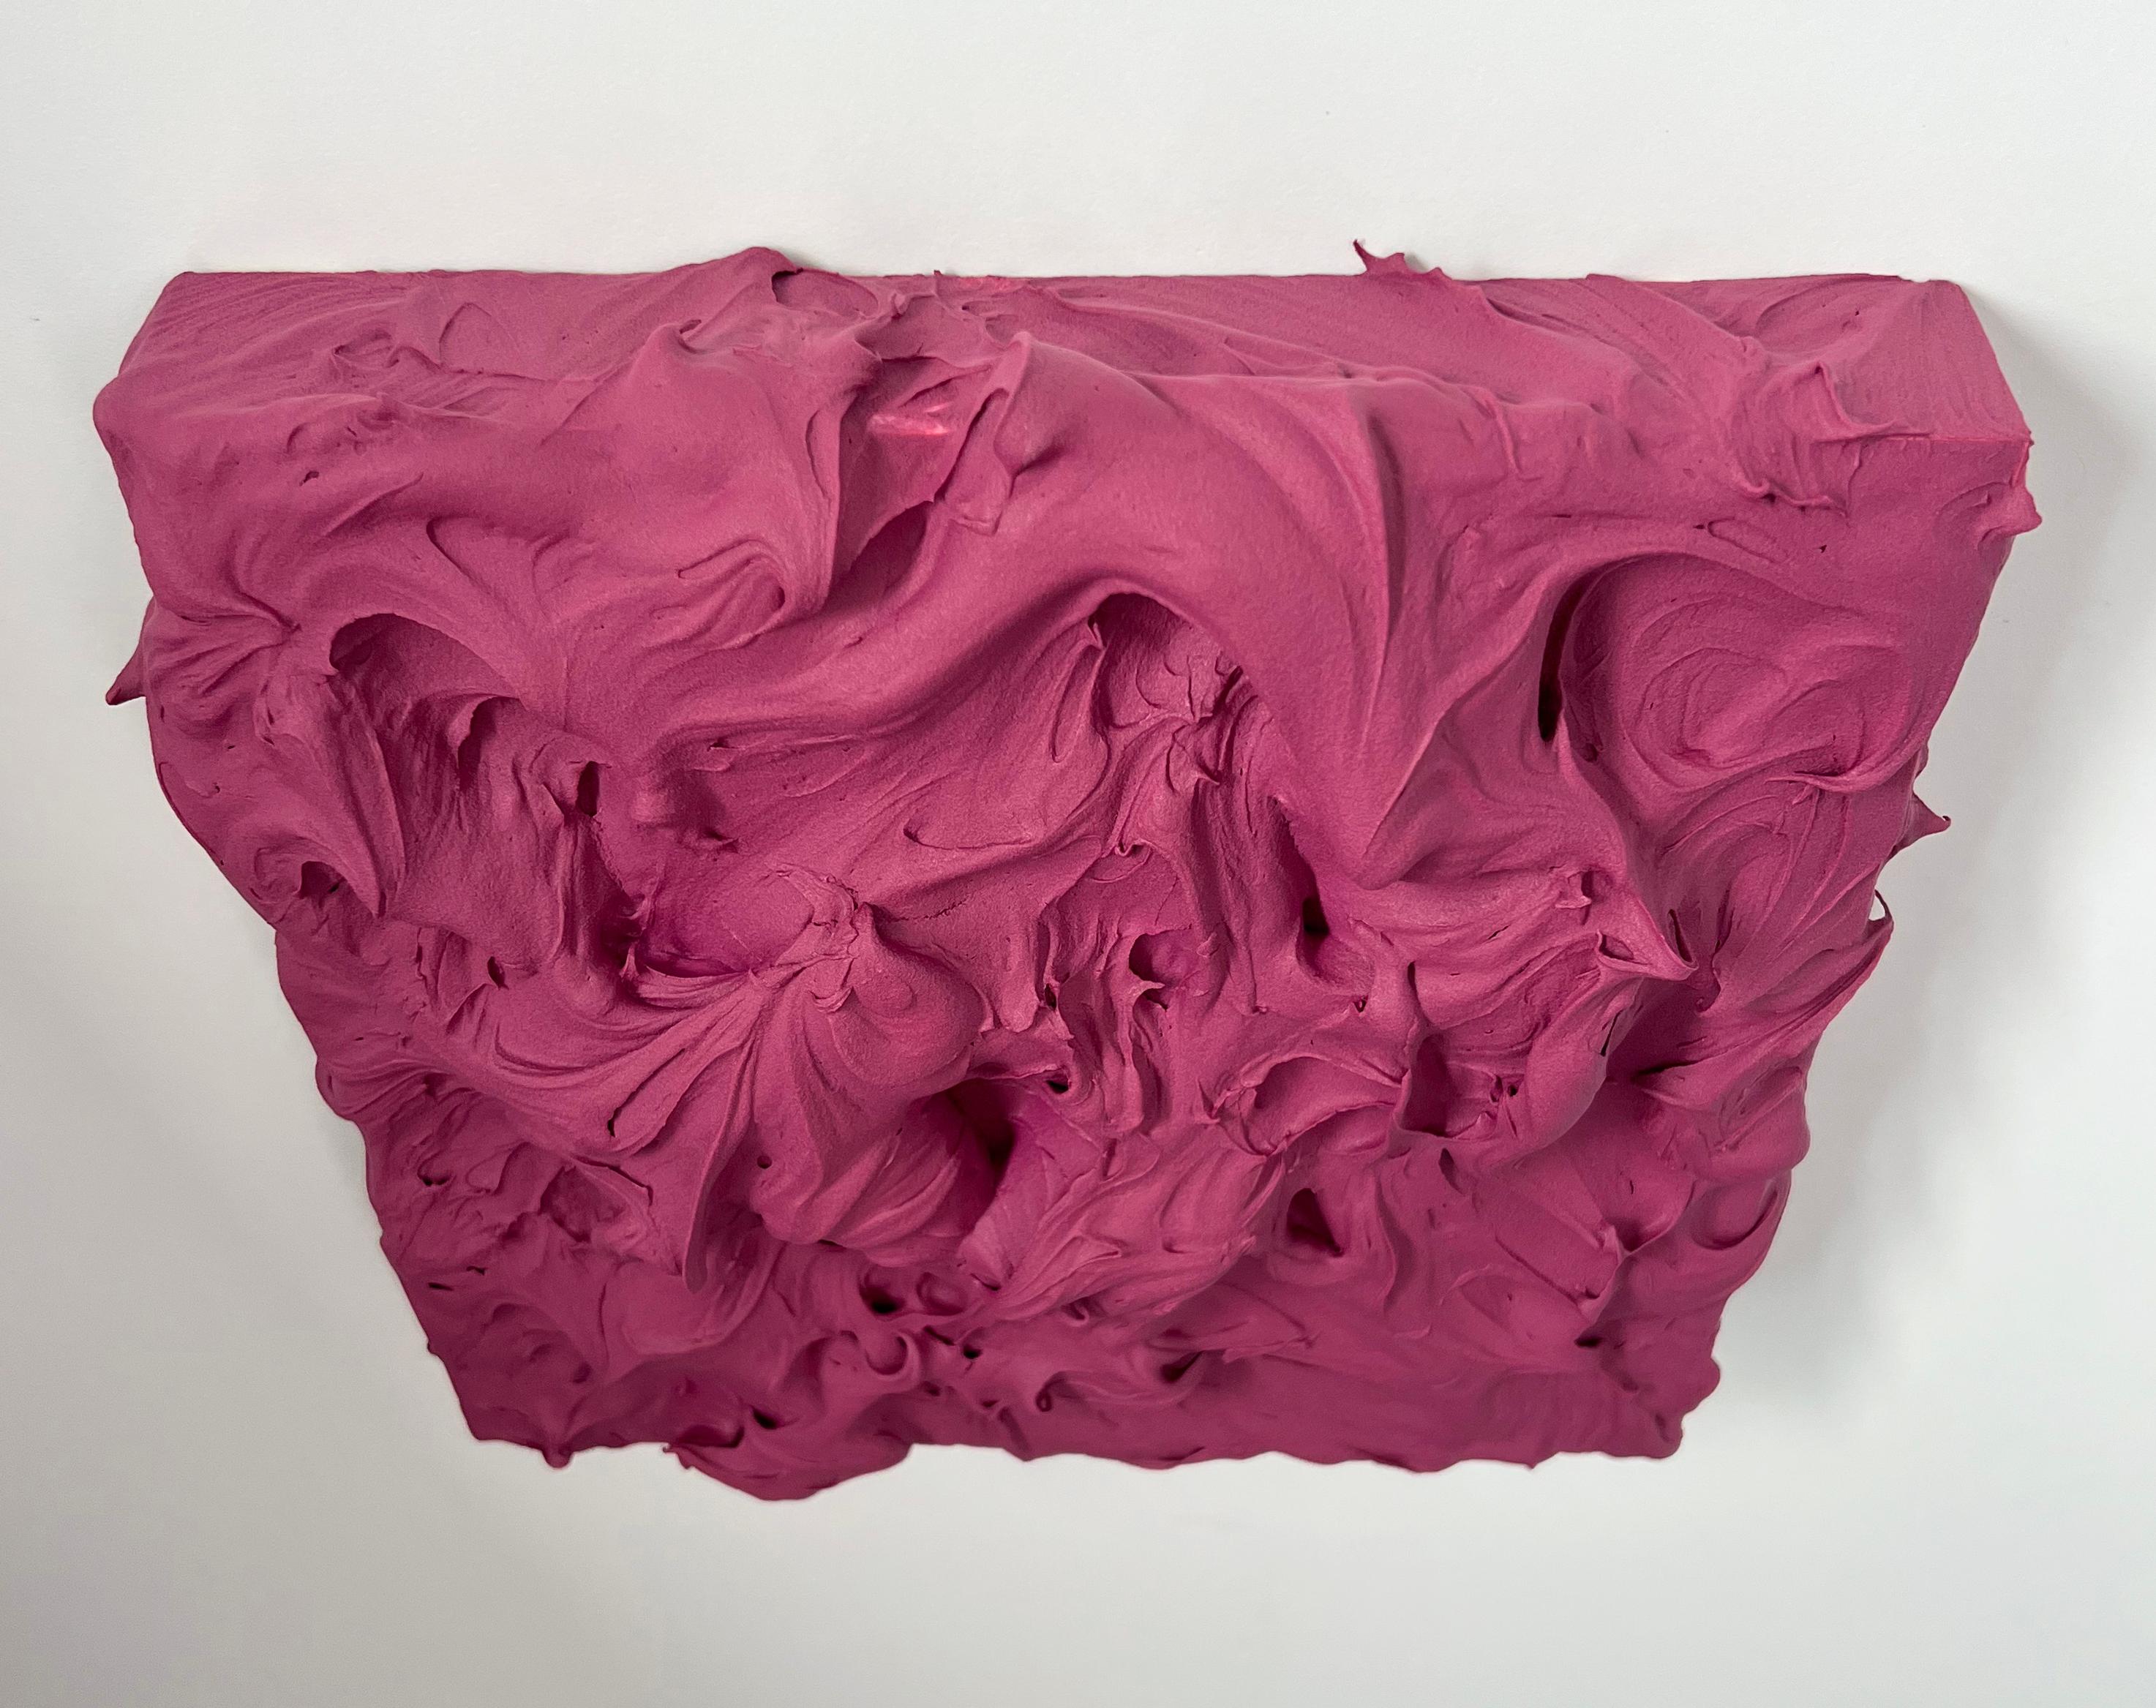 Mauve Excess (purple impasto thick painting monochrome pop art square design) - Painting by Chloe Hedden